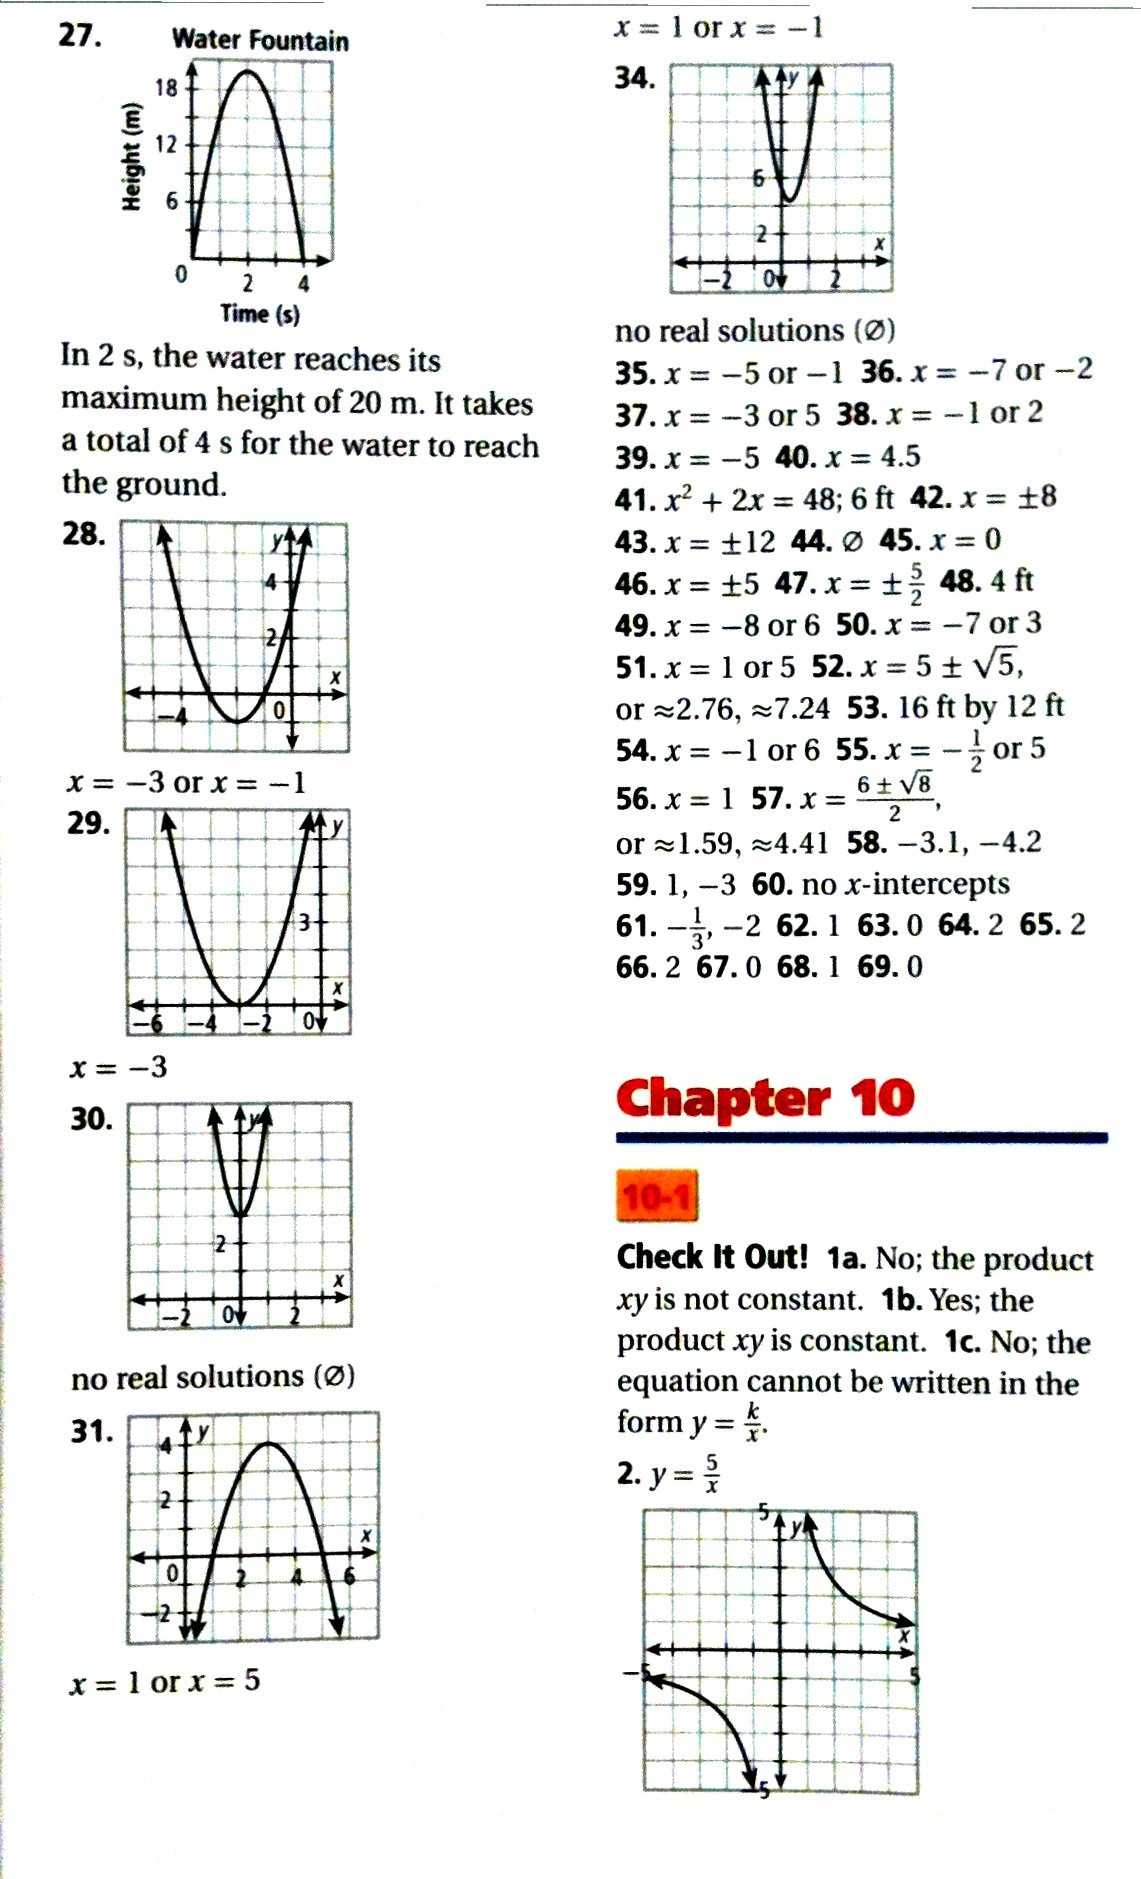 Pre Algebra Worksheets with Answer Key Also 13 Fresh Algebra 2 Worksheet Answers Image